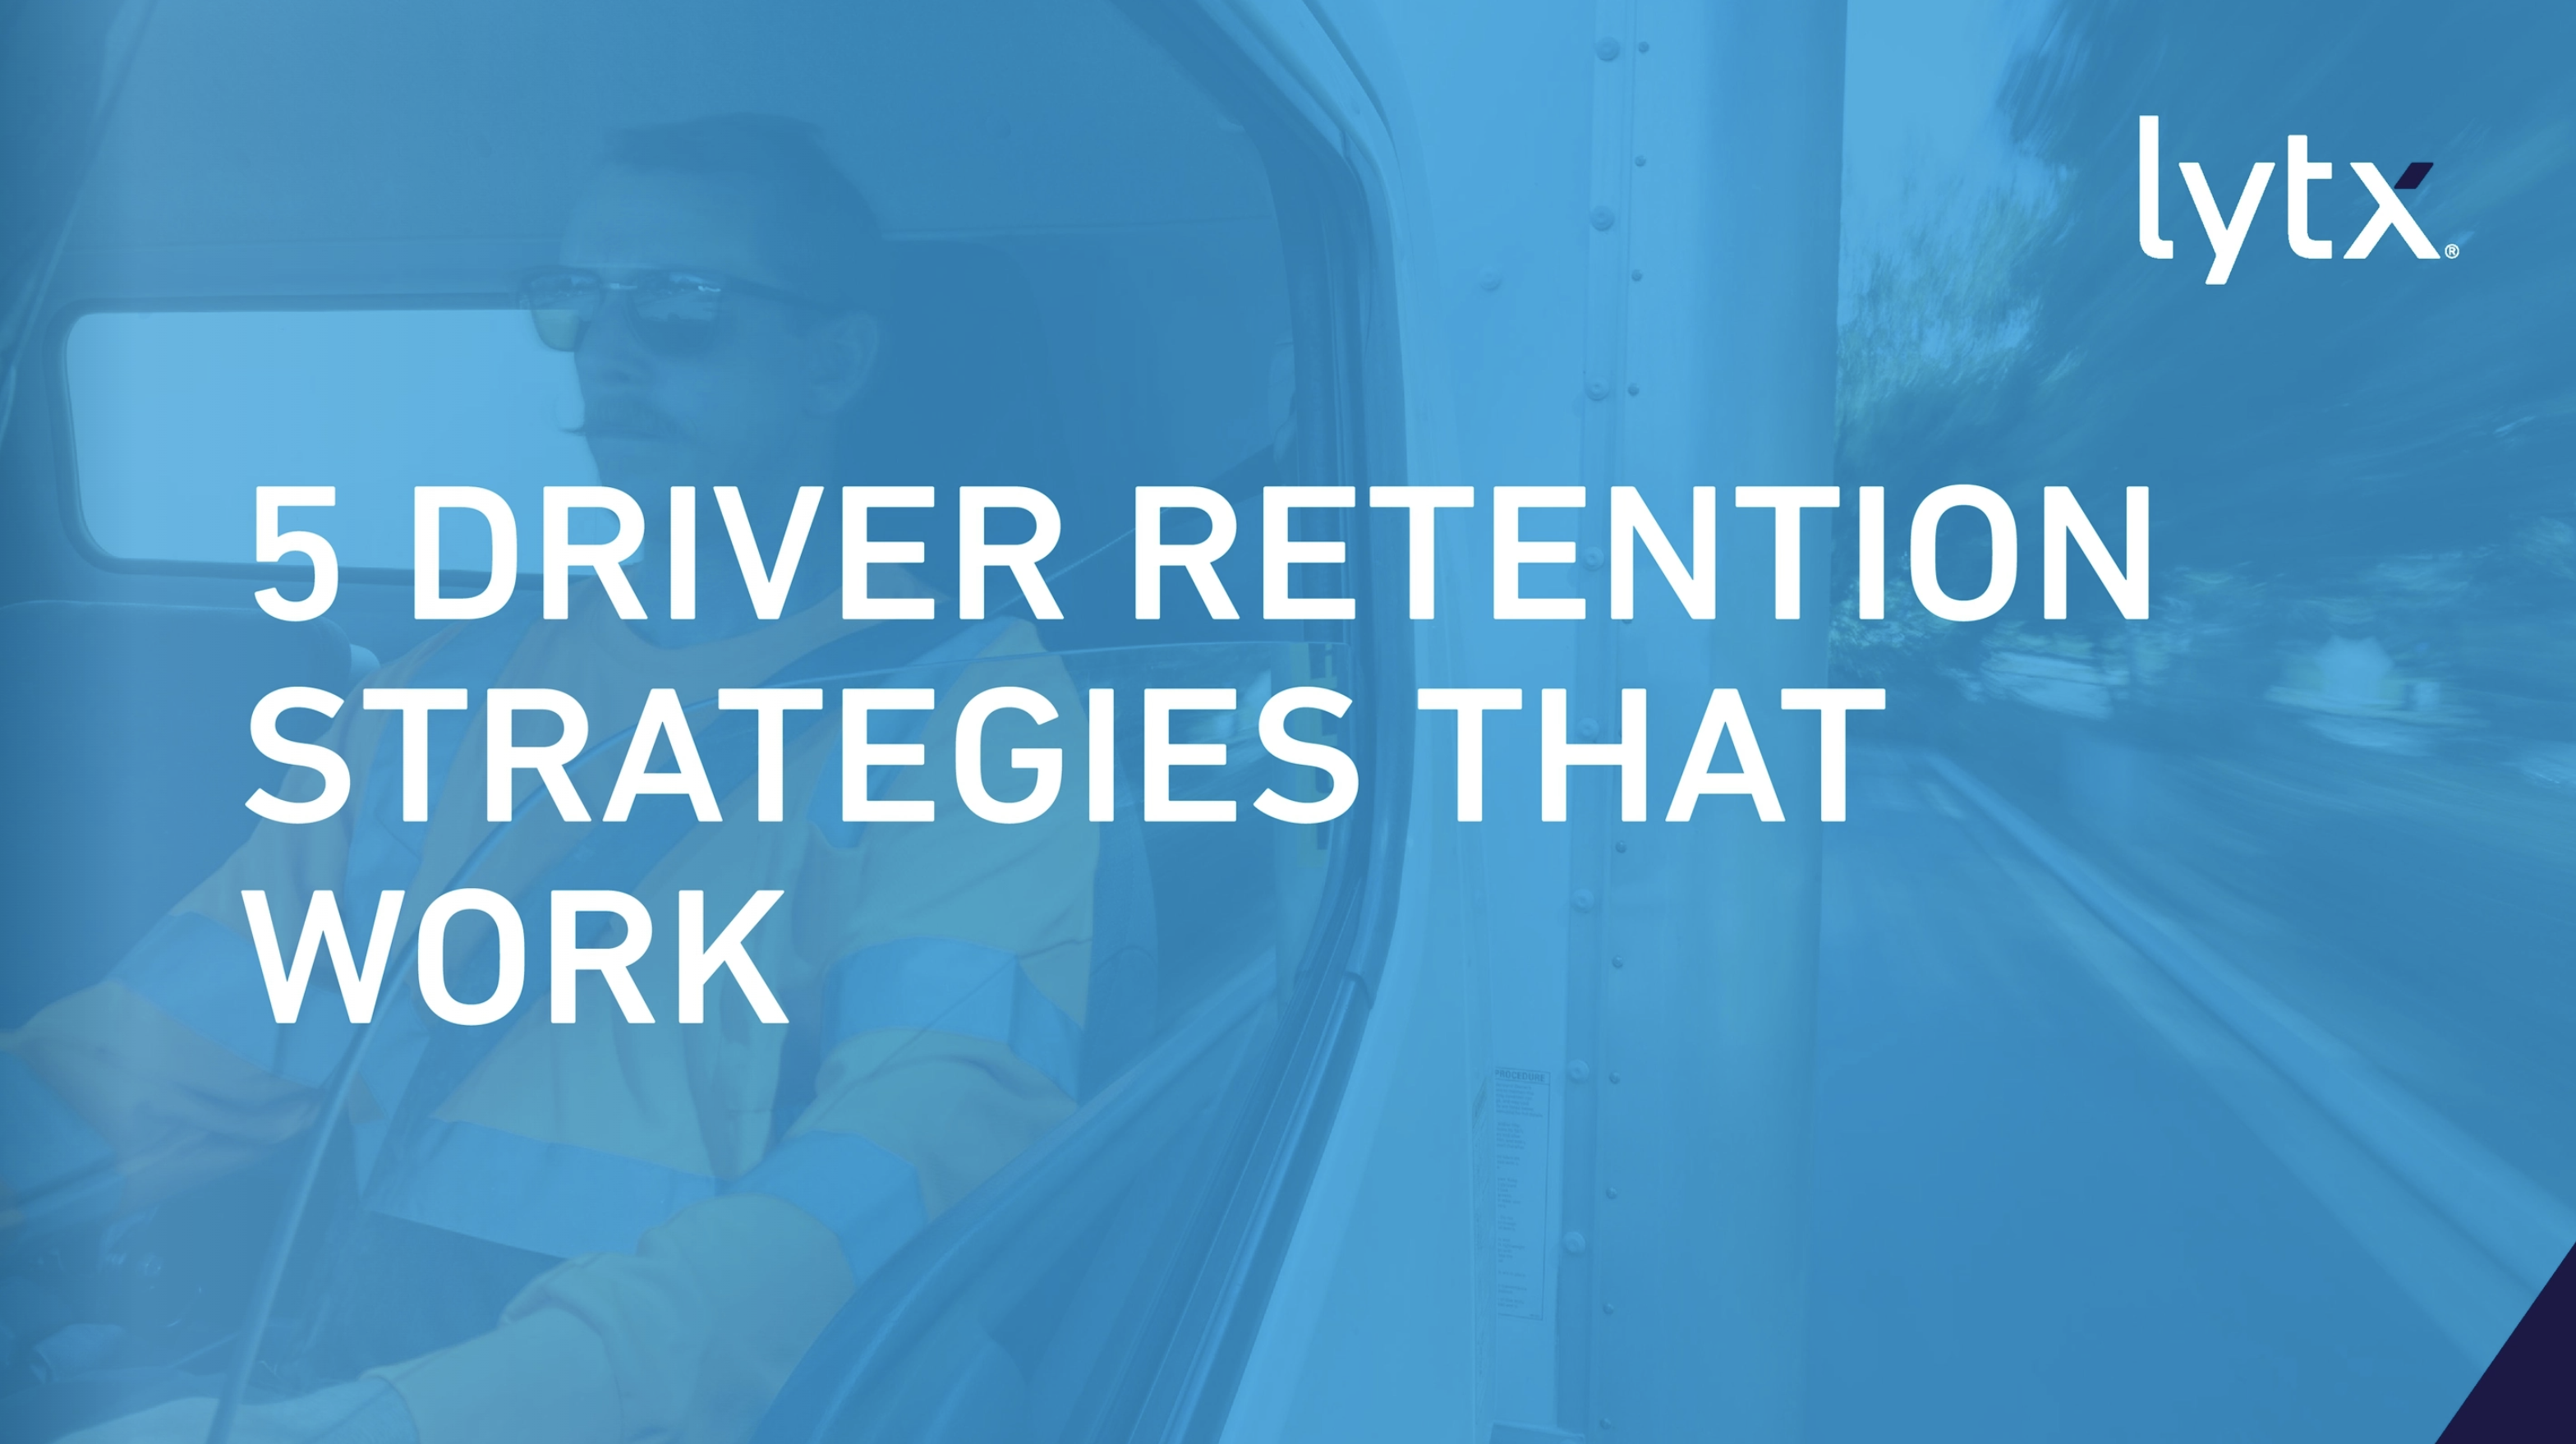 "5 Driver Retention Strategies That Work"